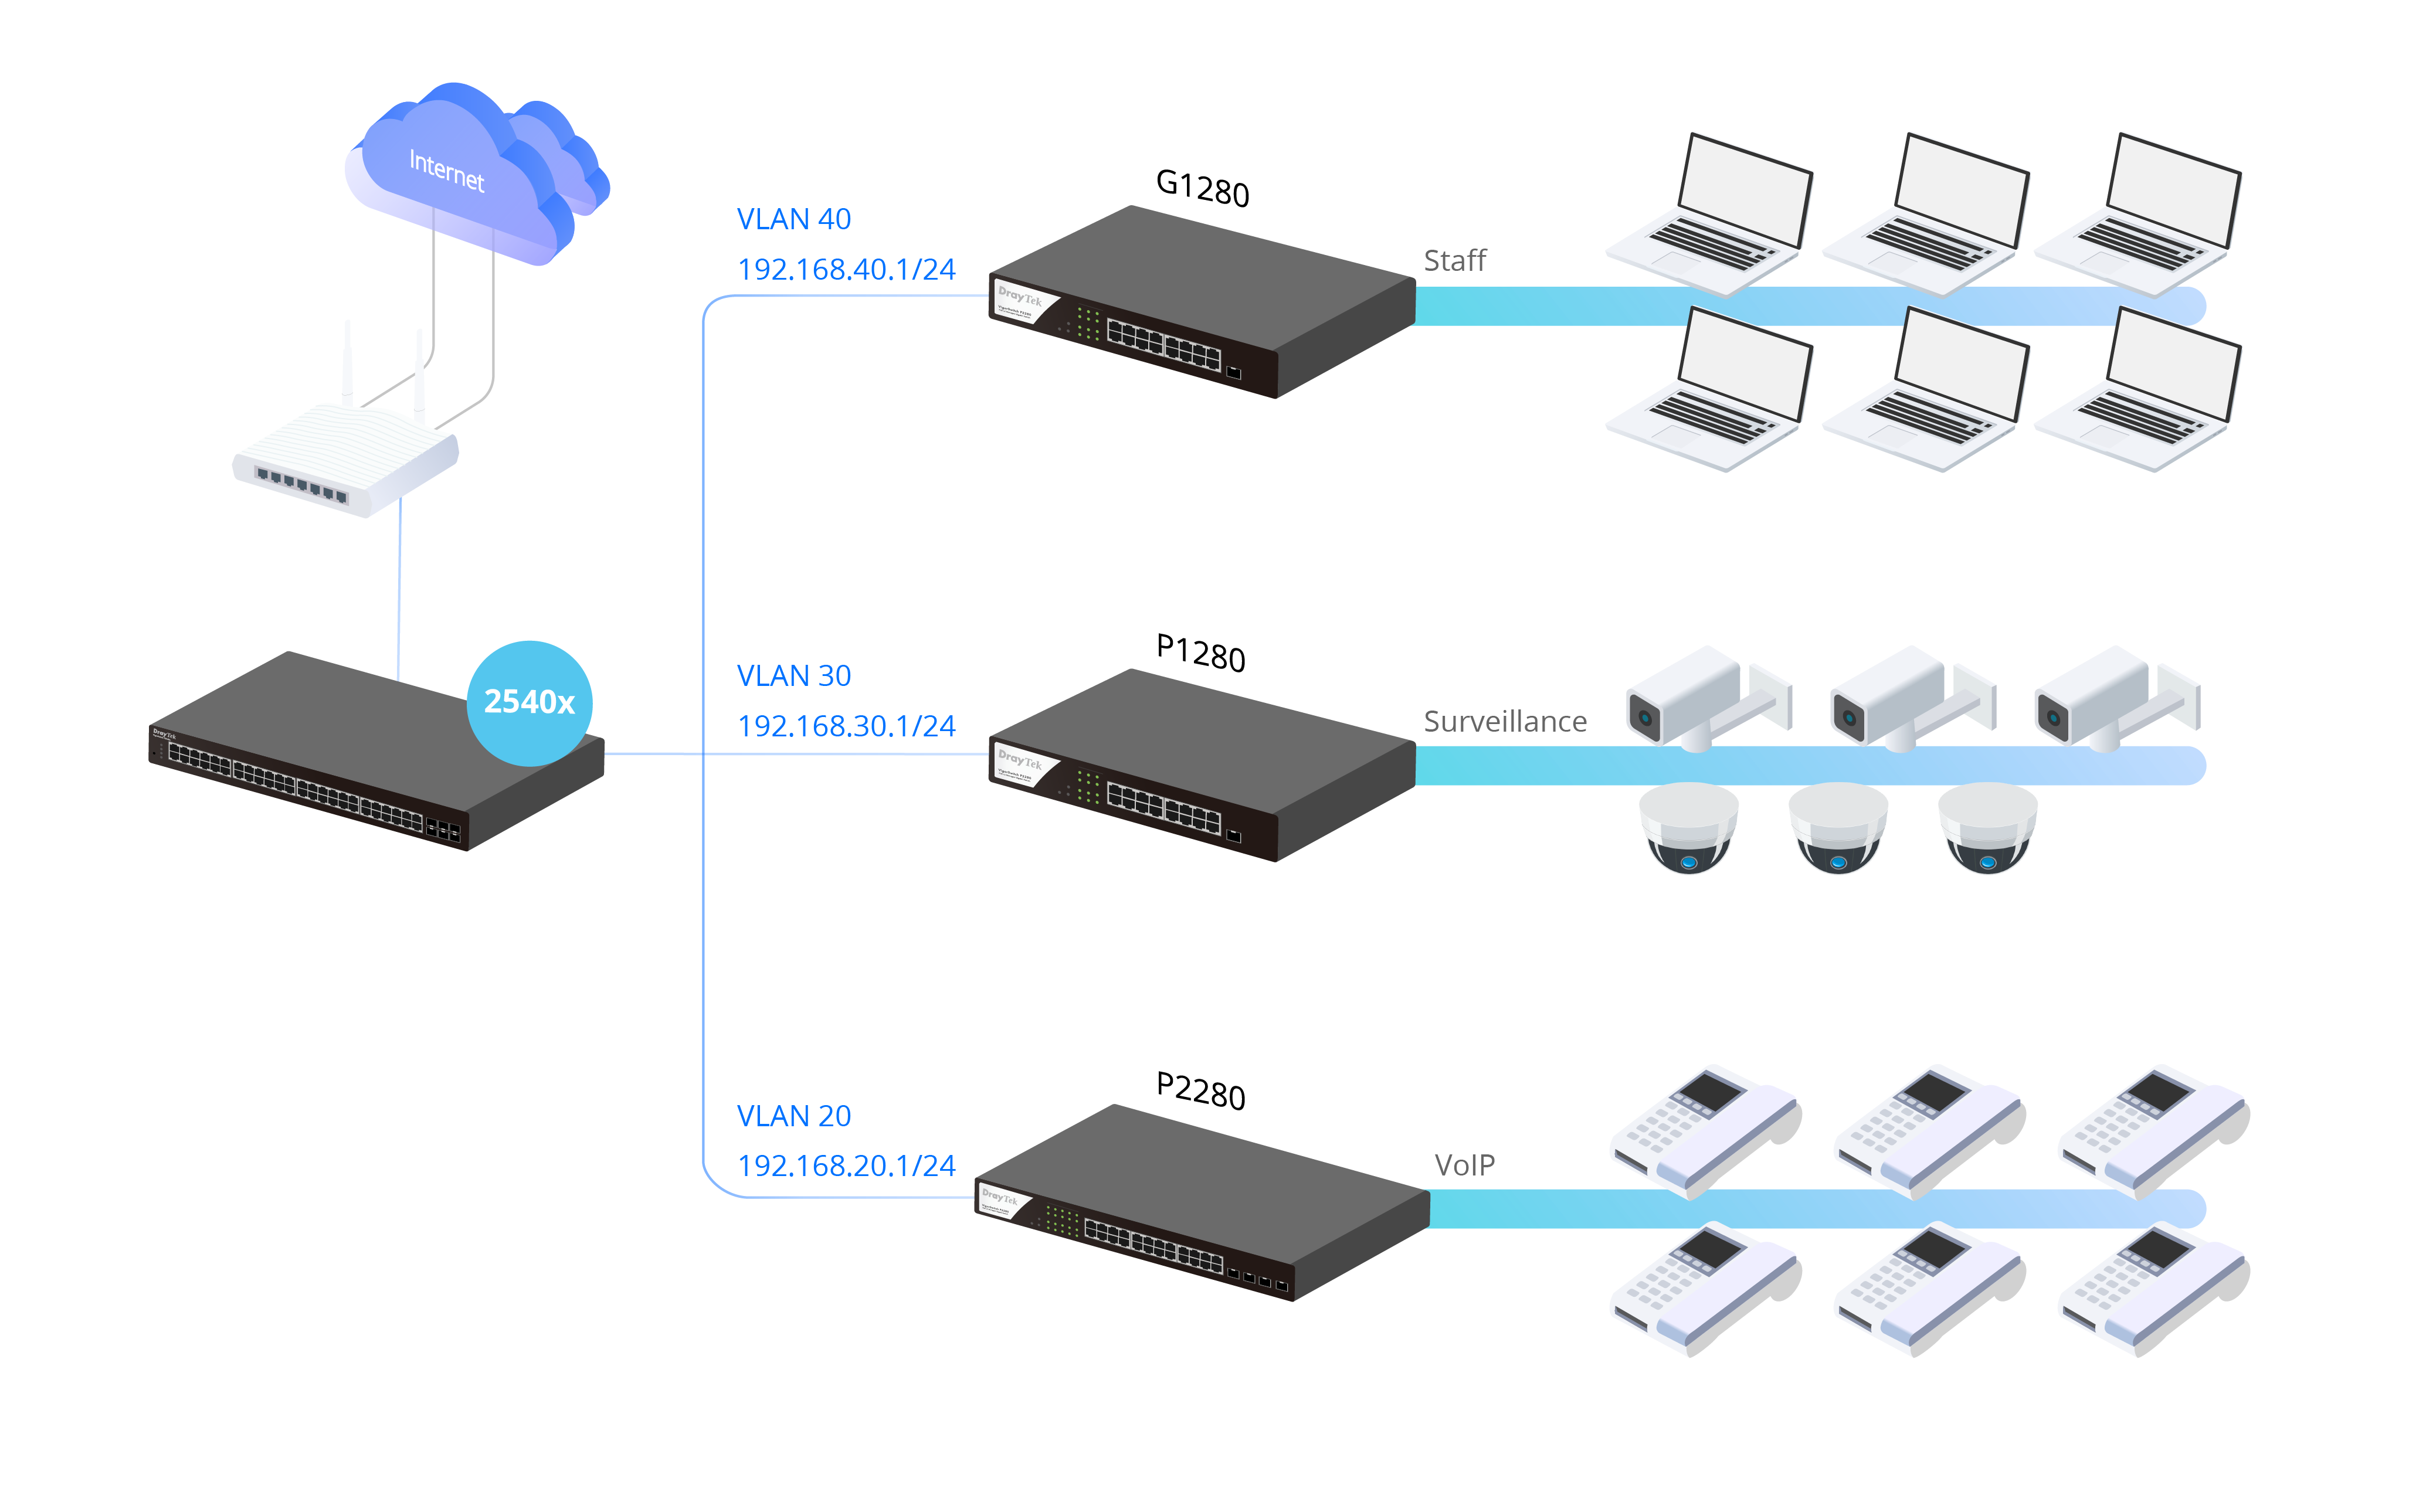 Scenario of DHCP Server & VLAN Routing